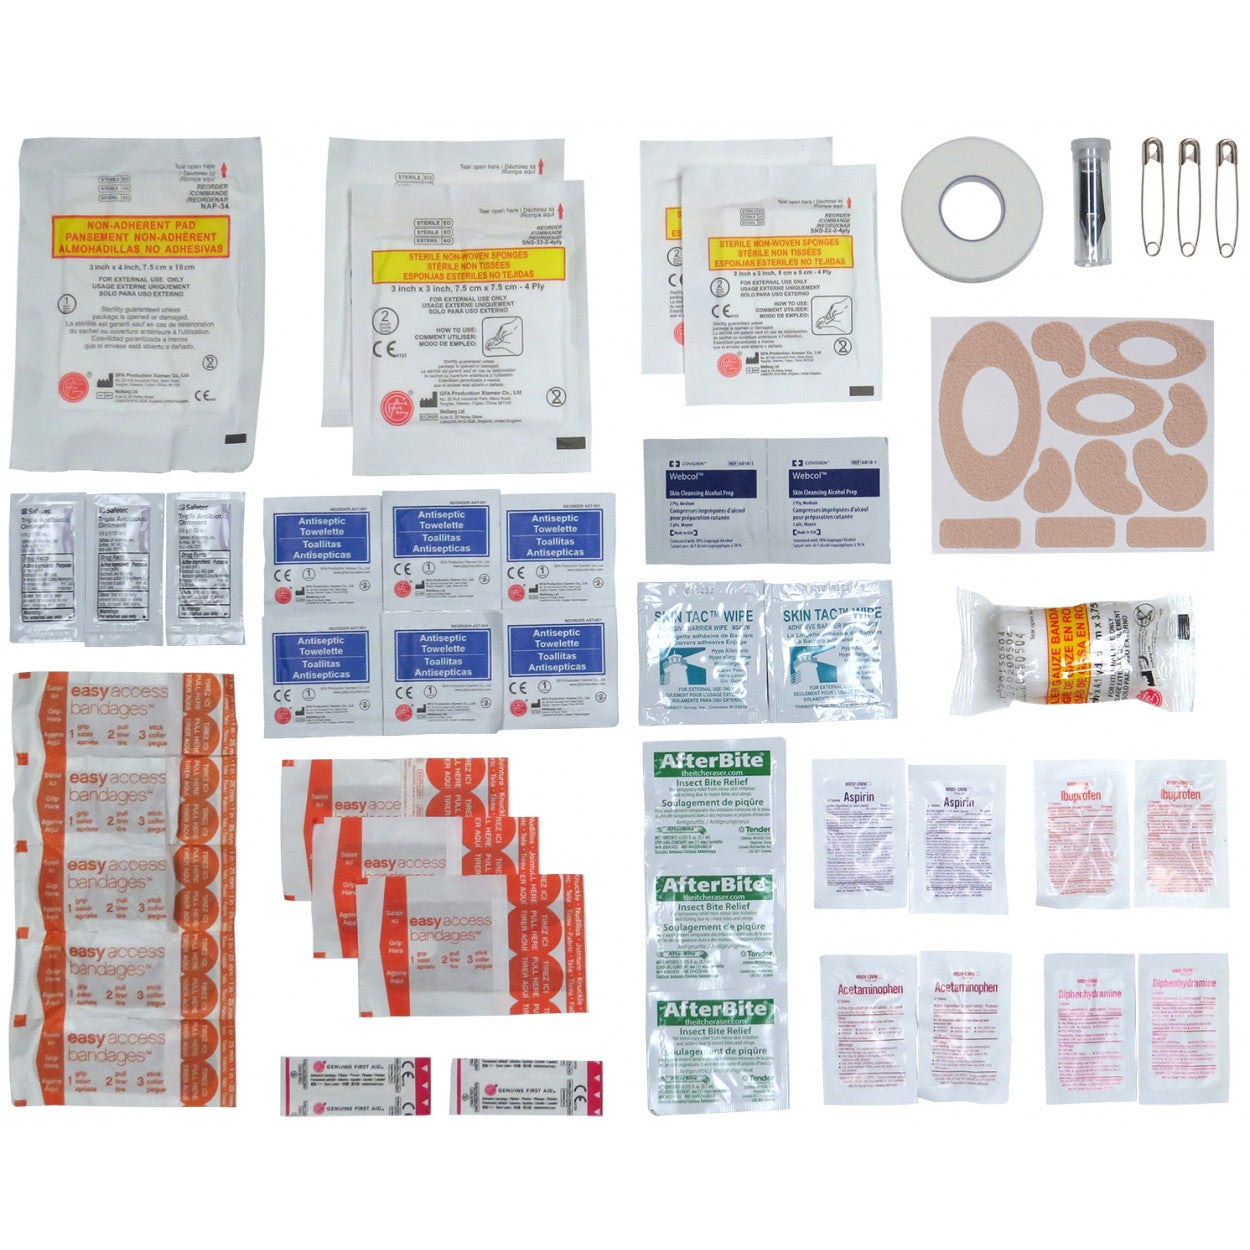 Adventure Medical Kit - Ultralight Medical Kit .5 First Aid Kit